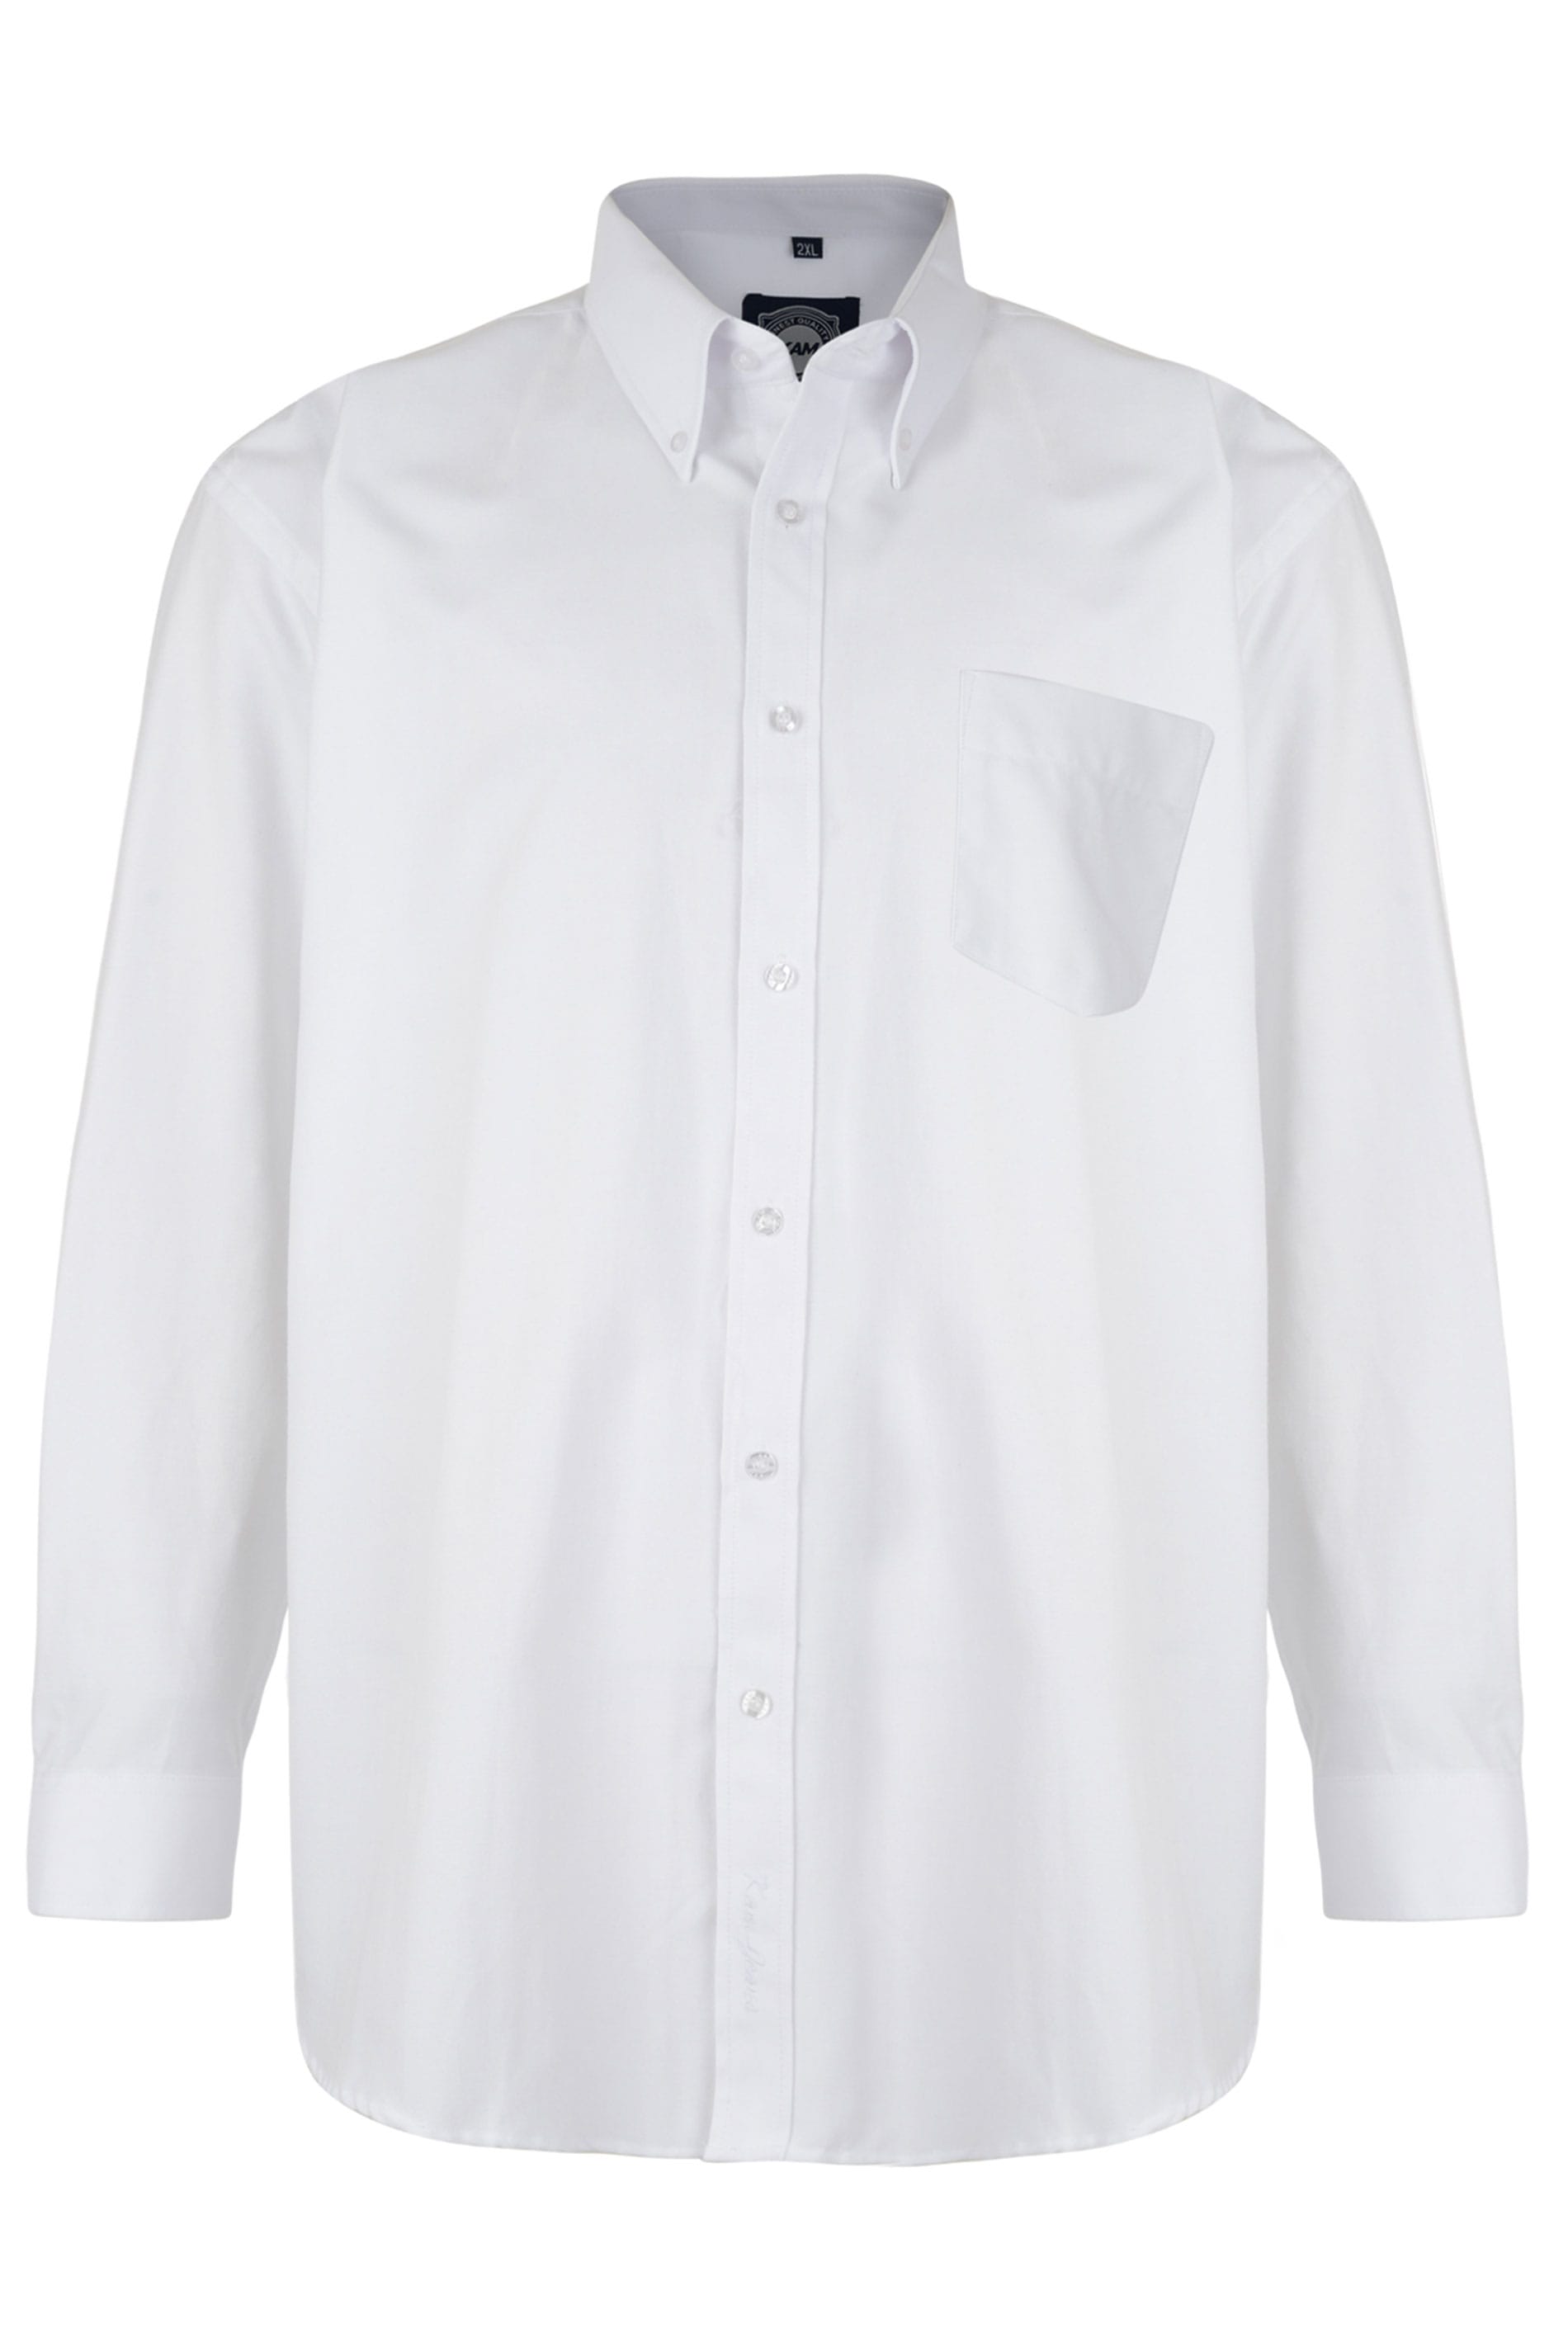 KAM White Oxford Long Sleeve Shirt | BadRhino 2